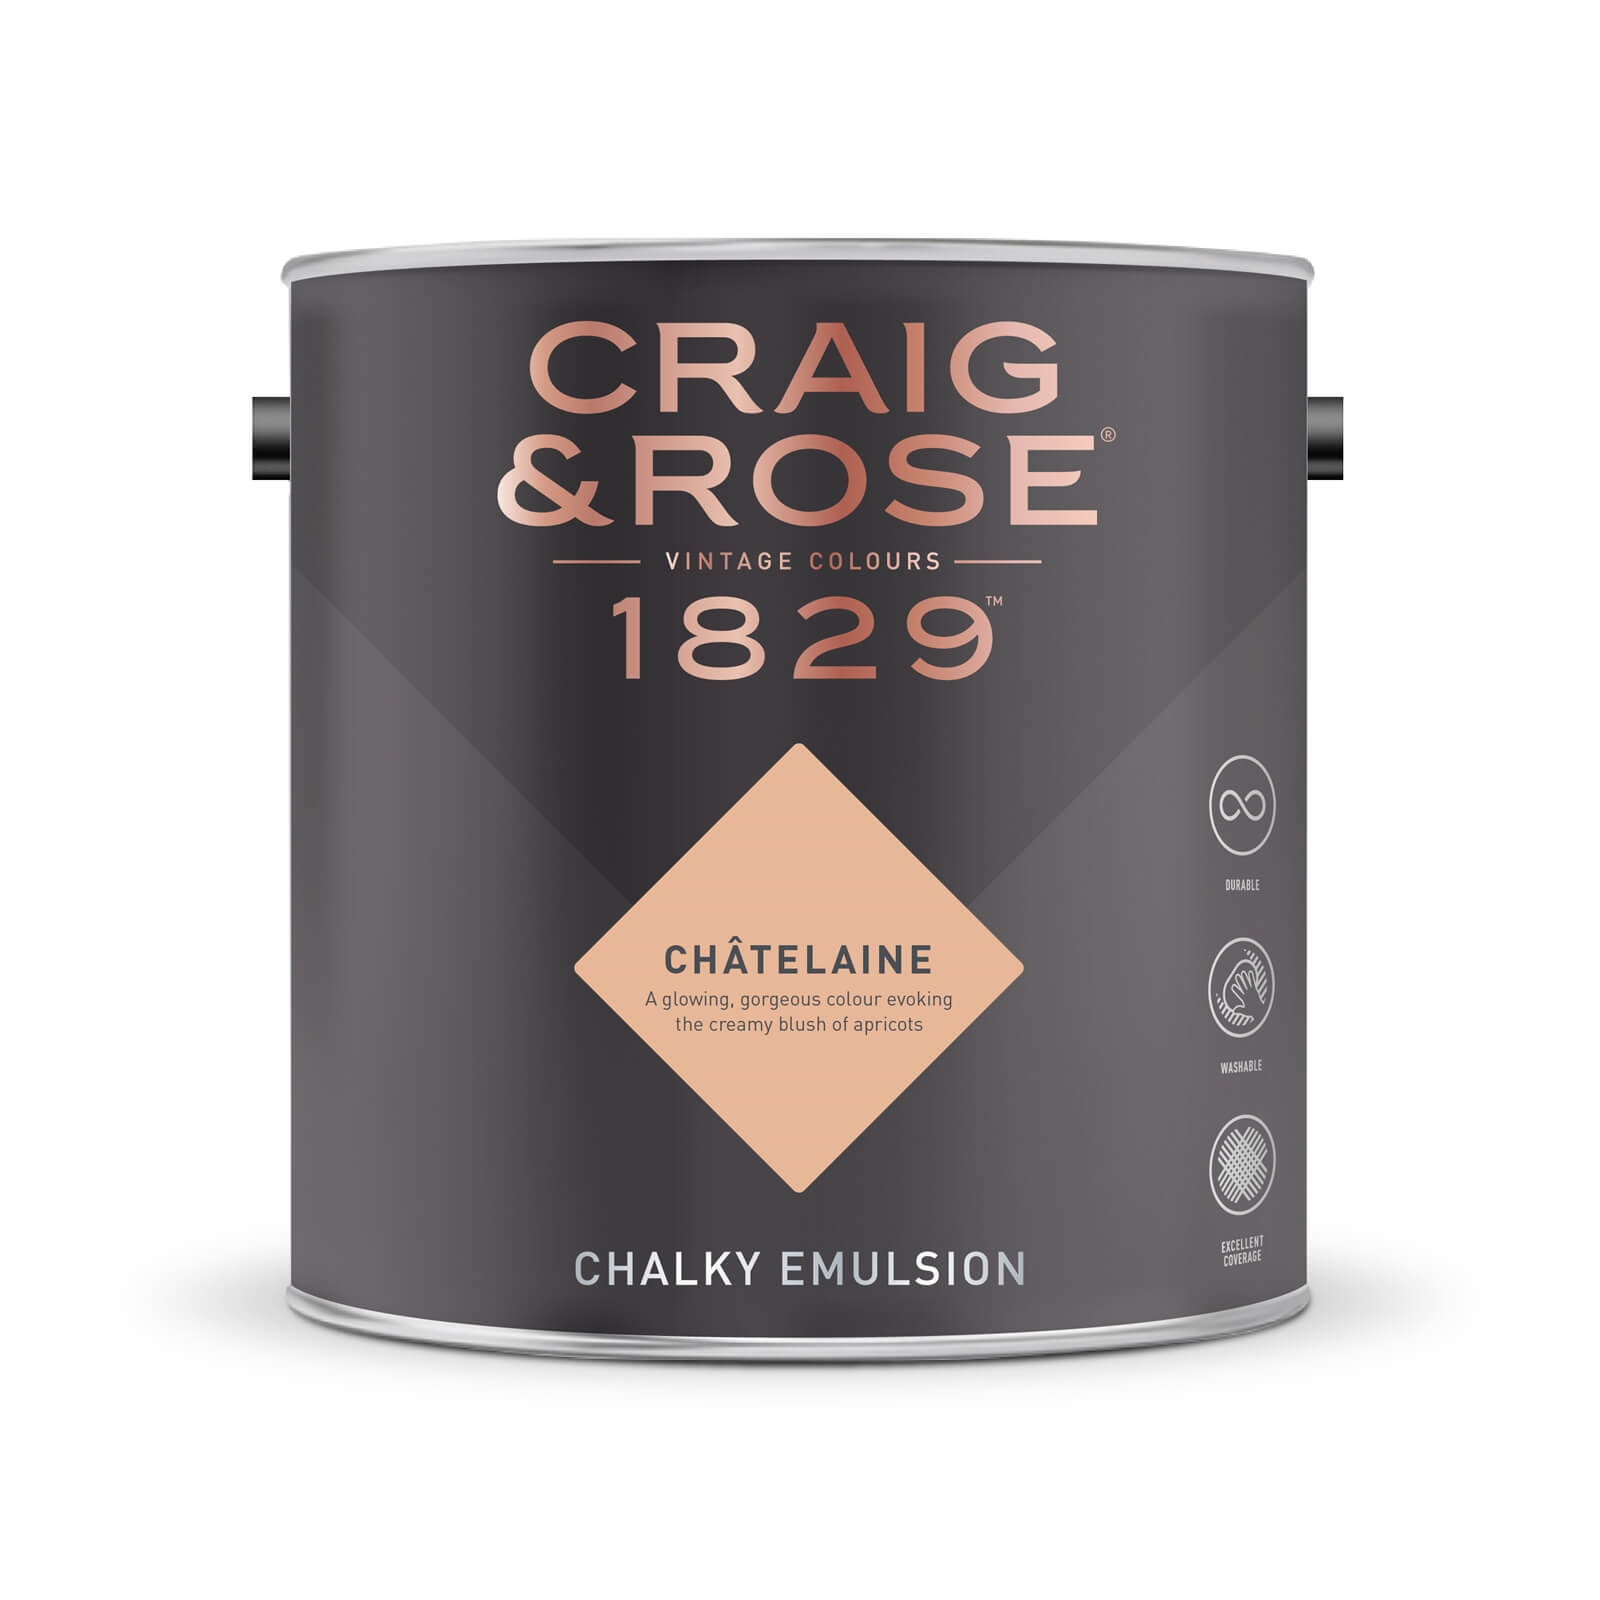 Craig & Rose 1829 Chalky Emulsion Paint Chatelaine - 750ml